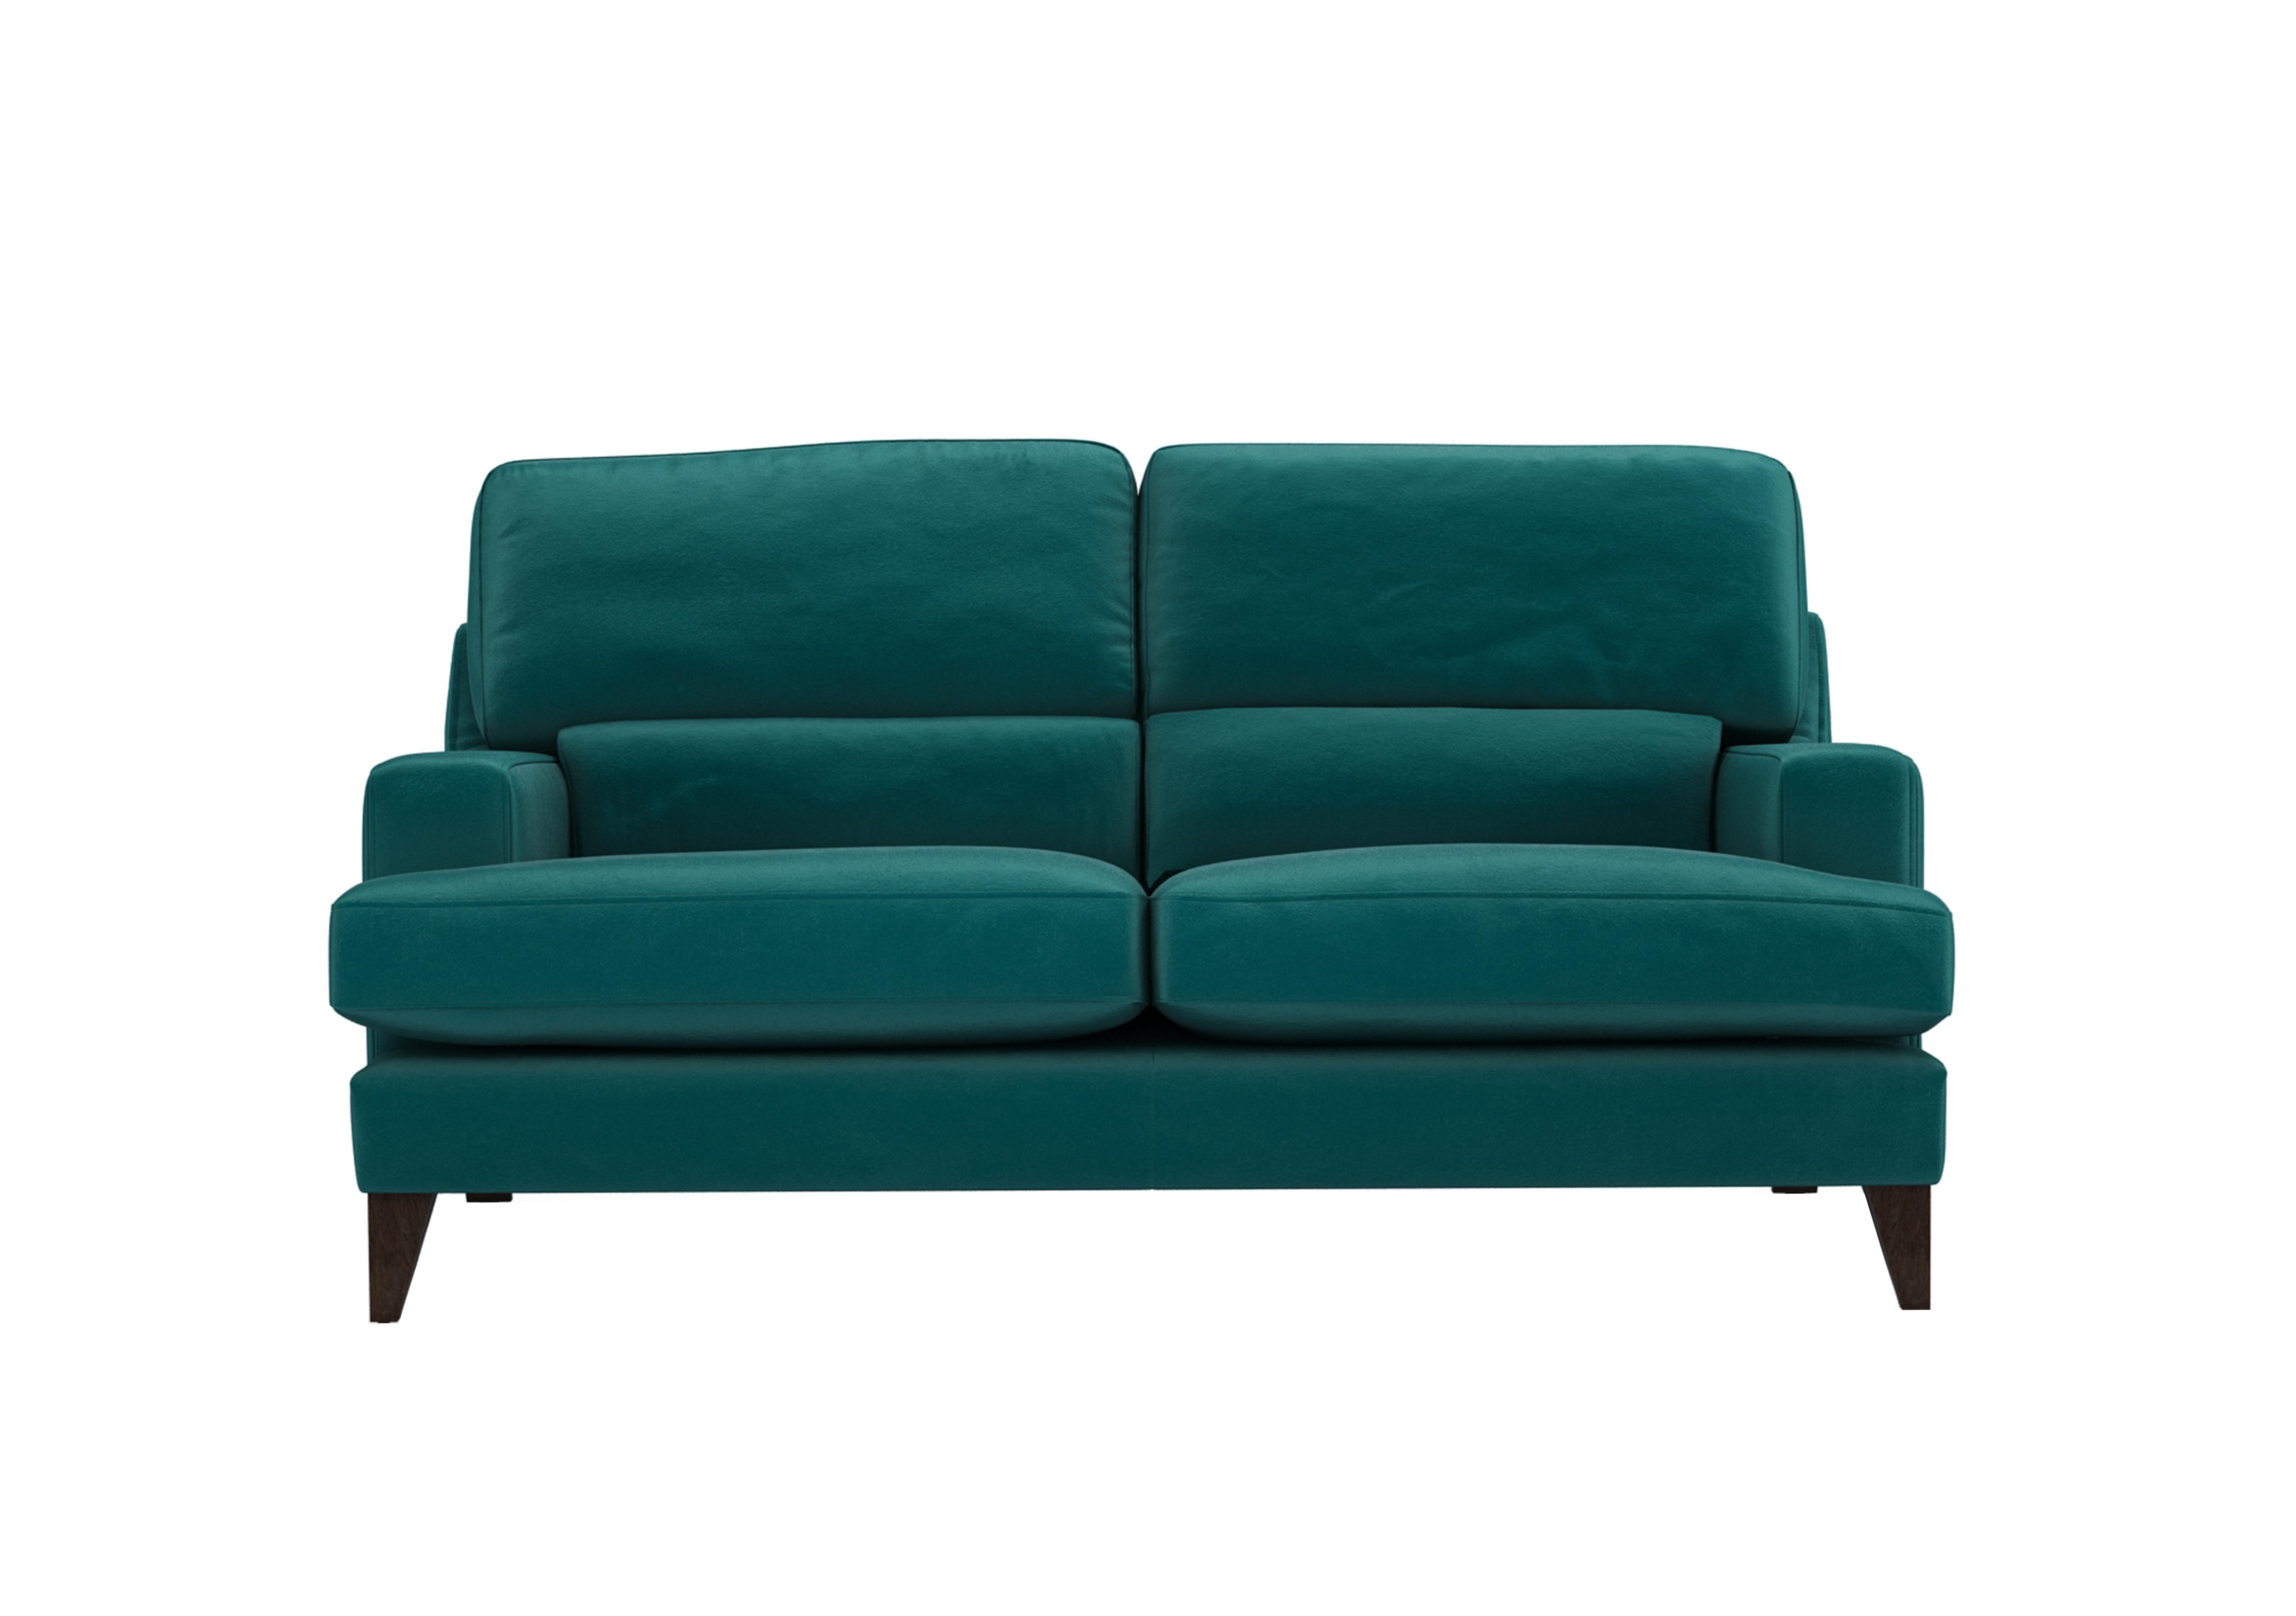 Romilly 2.5 Seater Fabric Sofa in Dra008 Dragoneye Wa Ft on Furniture Village